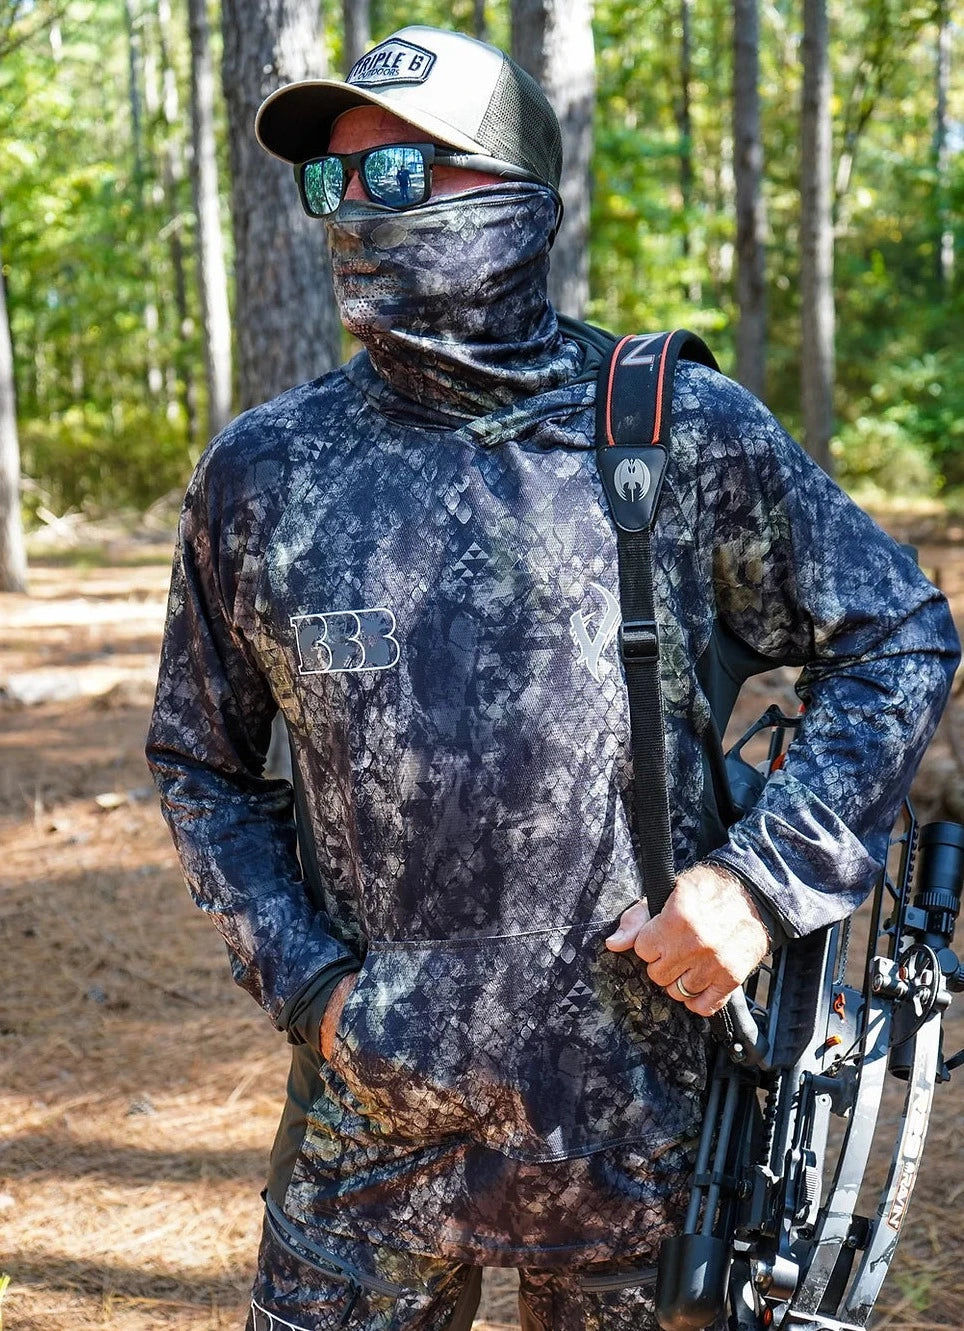 Deep Woods Early Season Stealth Shirt- Vycah Camo BBB Edition